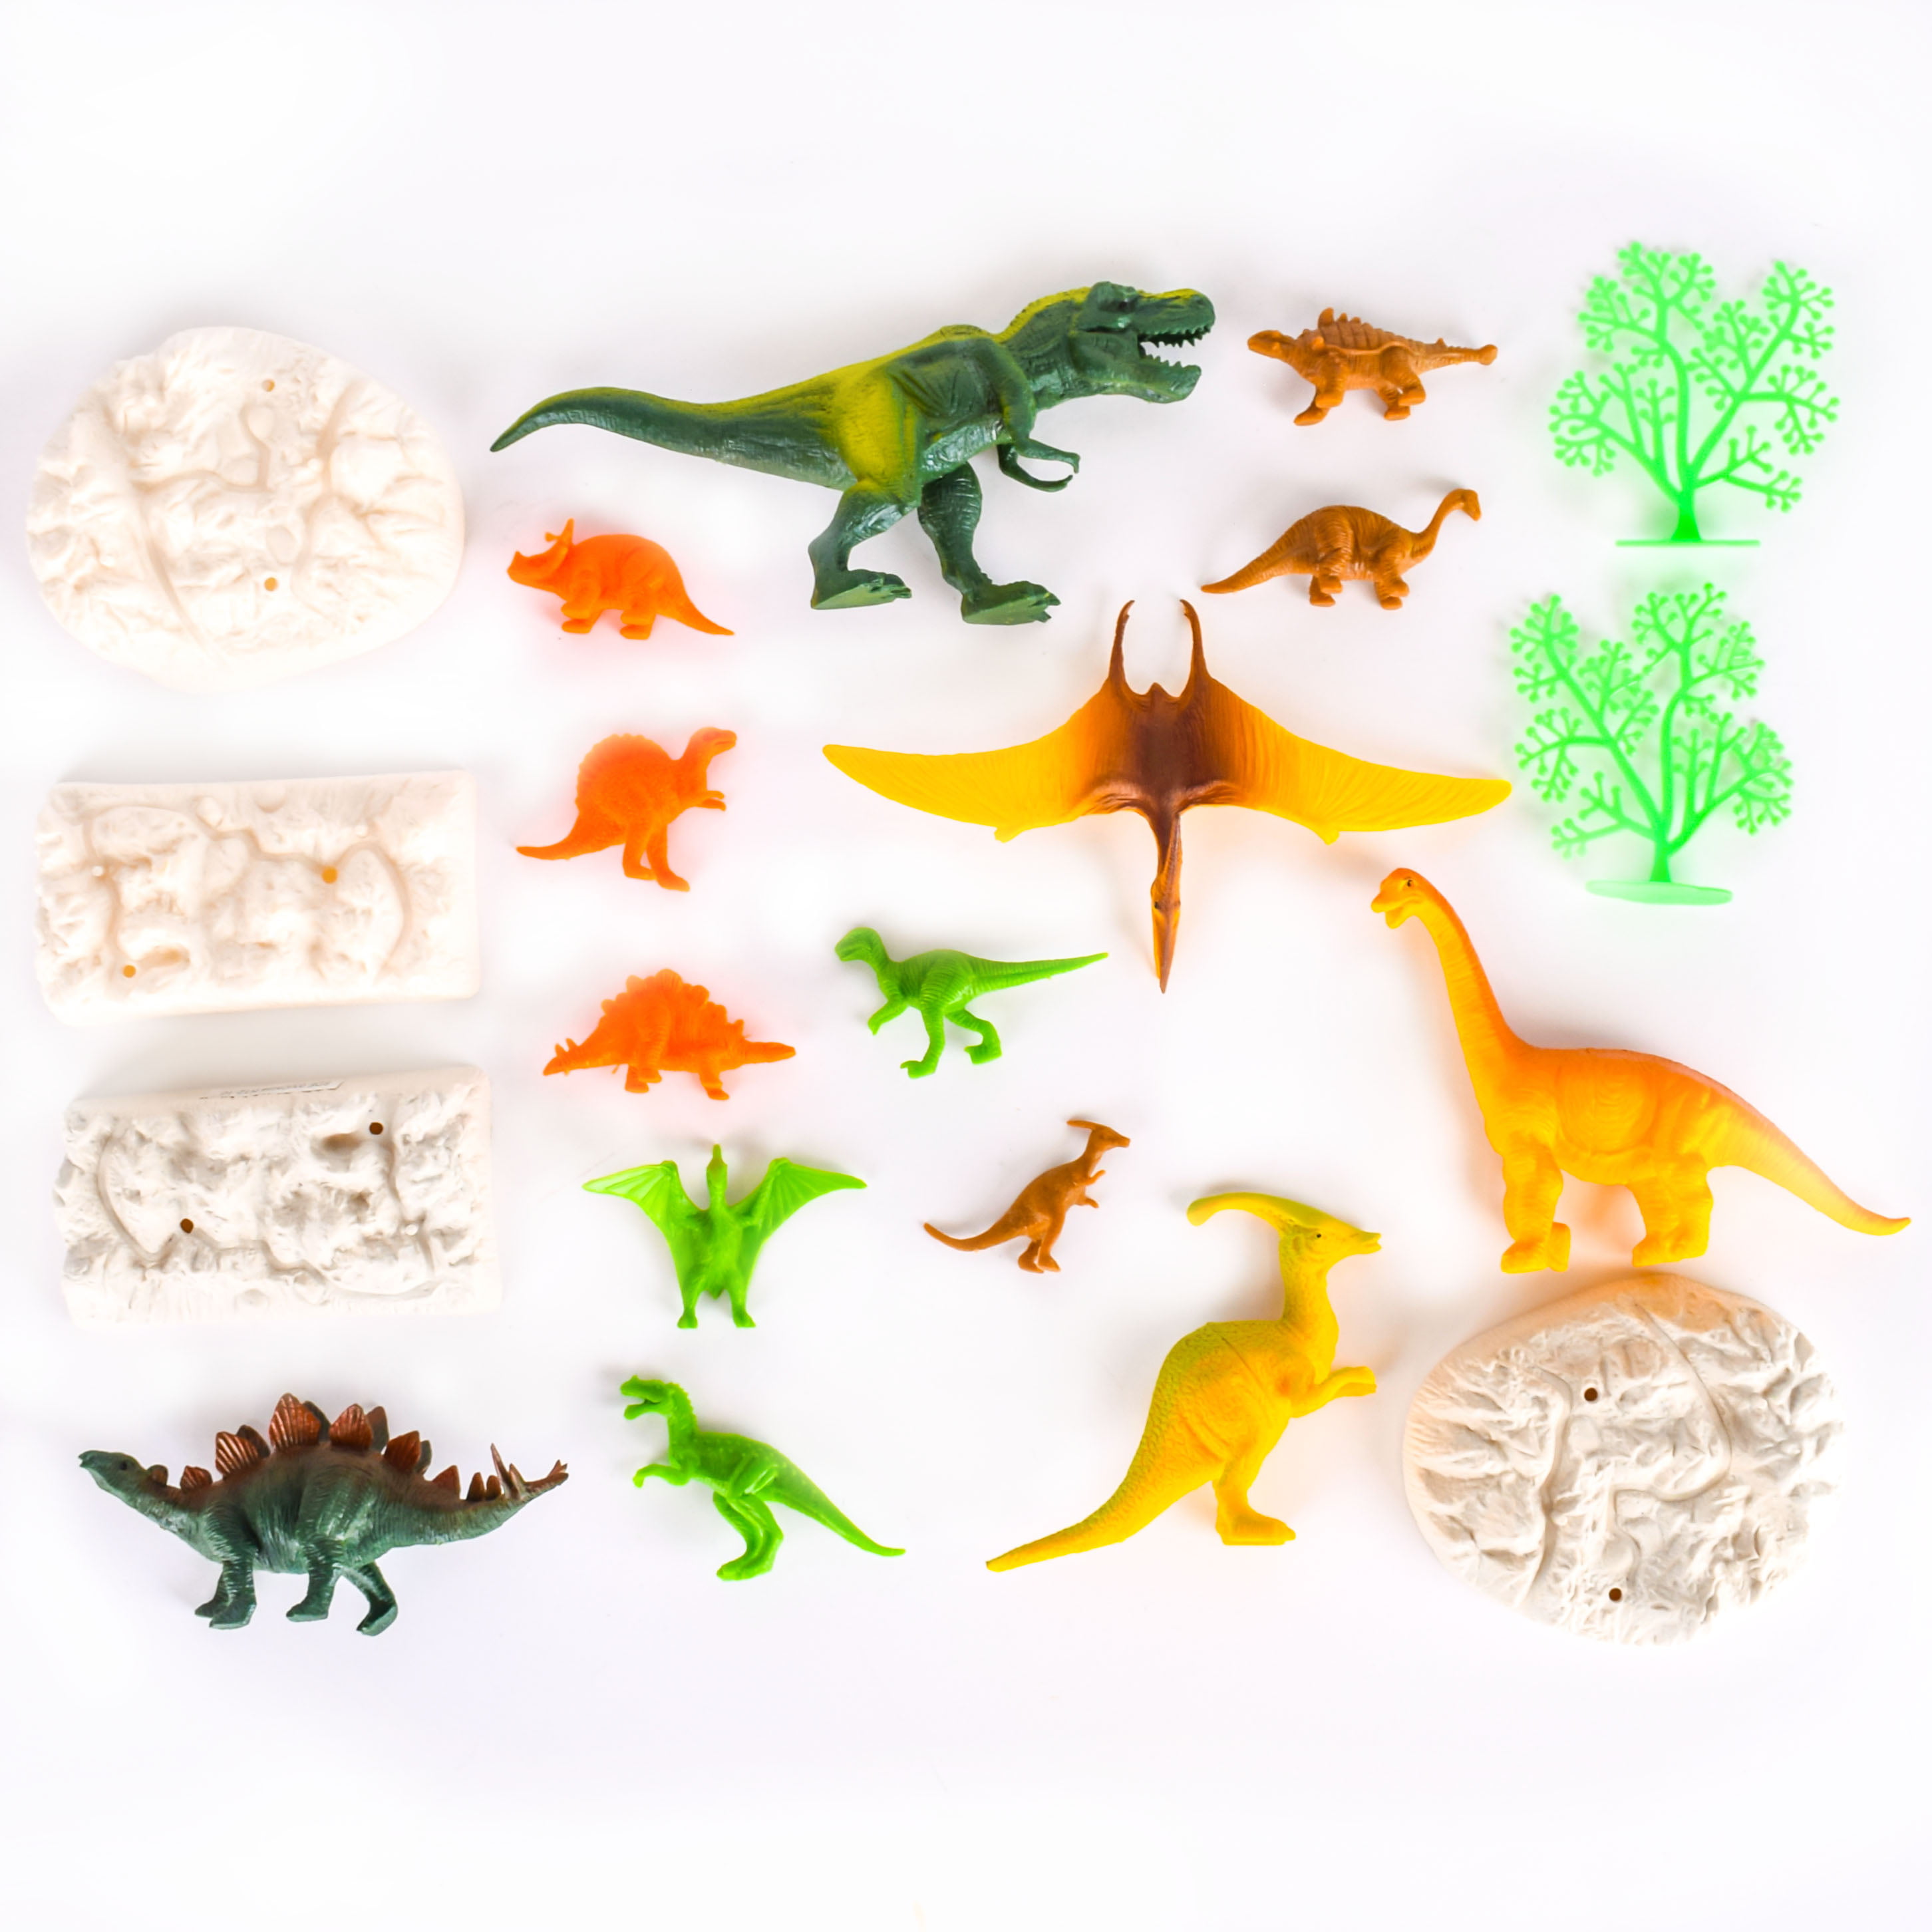 24 x Kids Small Plastic Figures Wild Dinosaur Animals Dinosaur Model Toys Gift I 